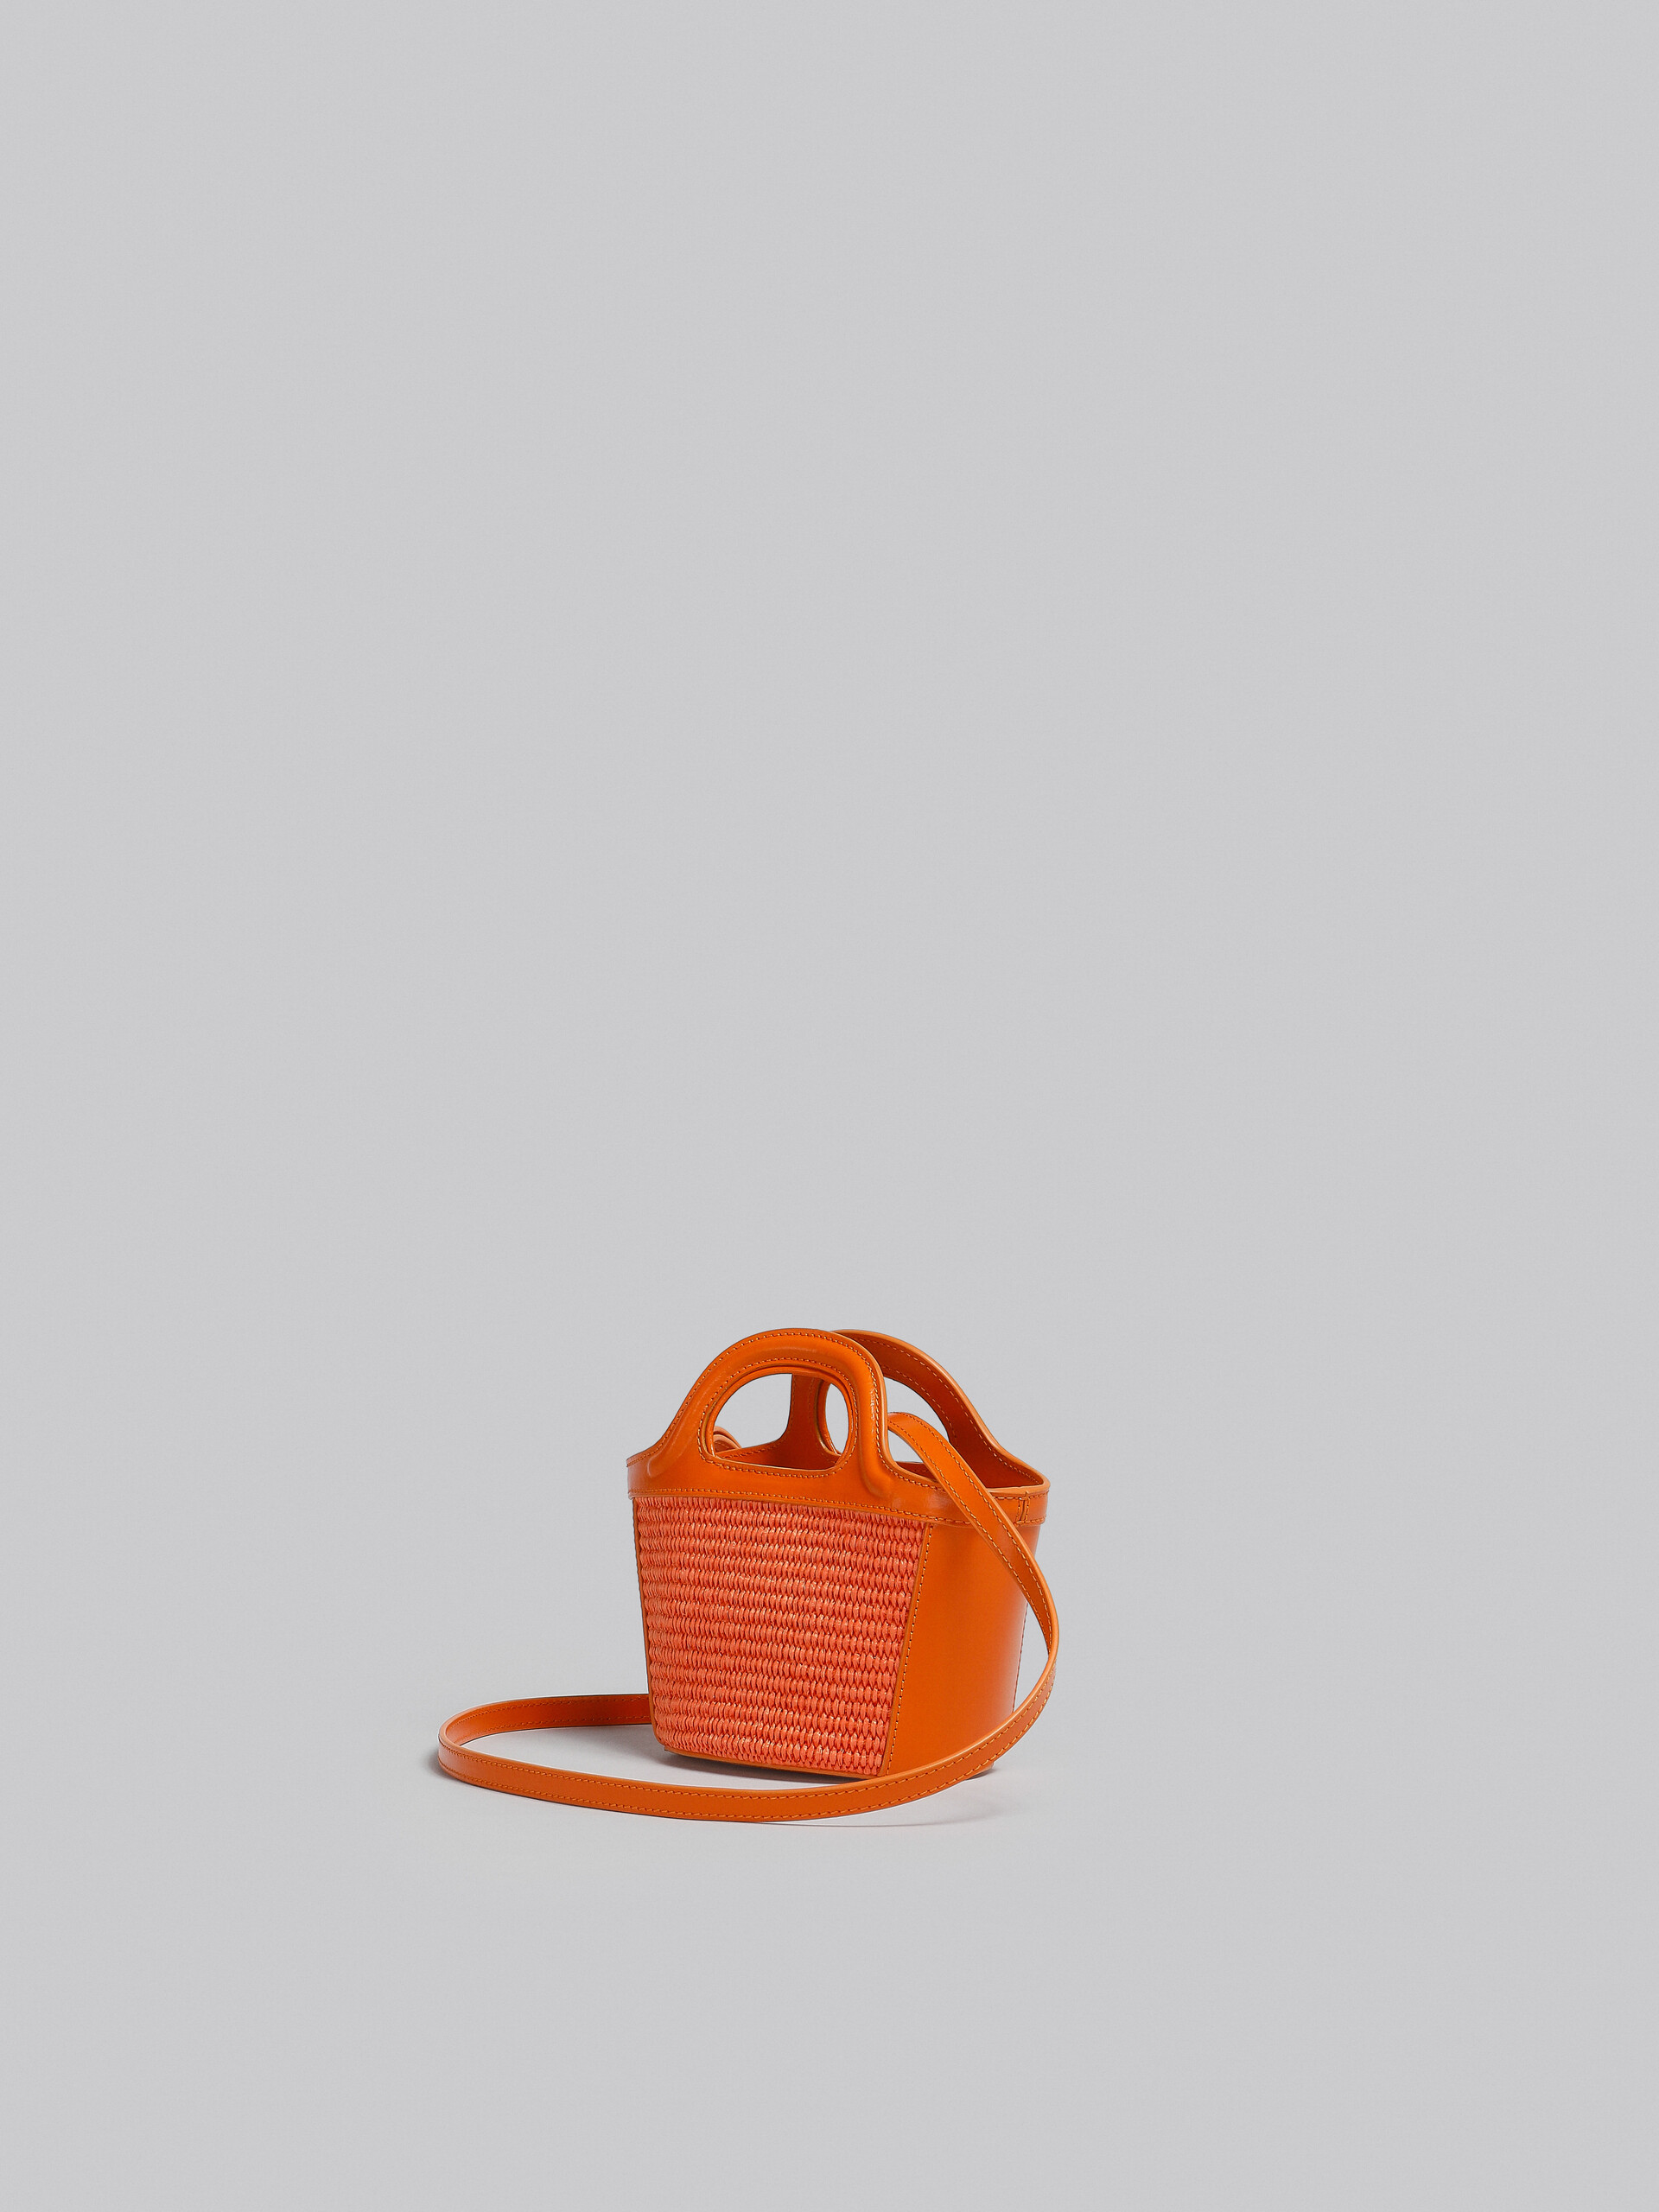 Tropicalia Micro Bag in orange leather and raffia - Handbag - Image 3